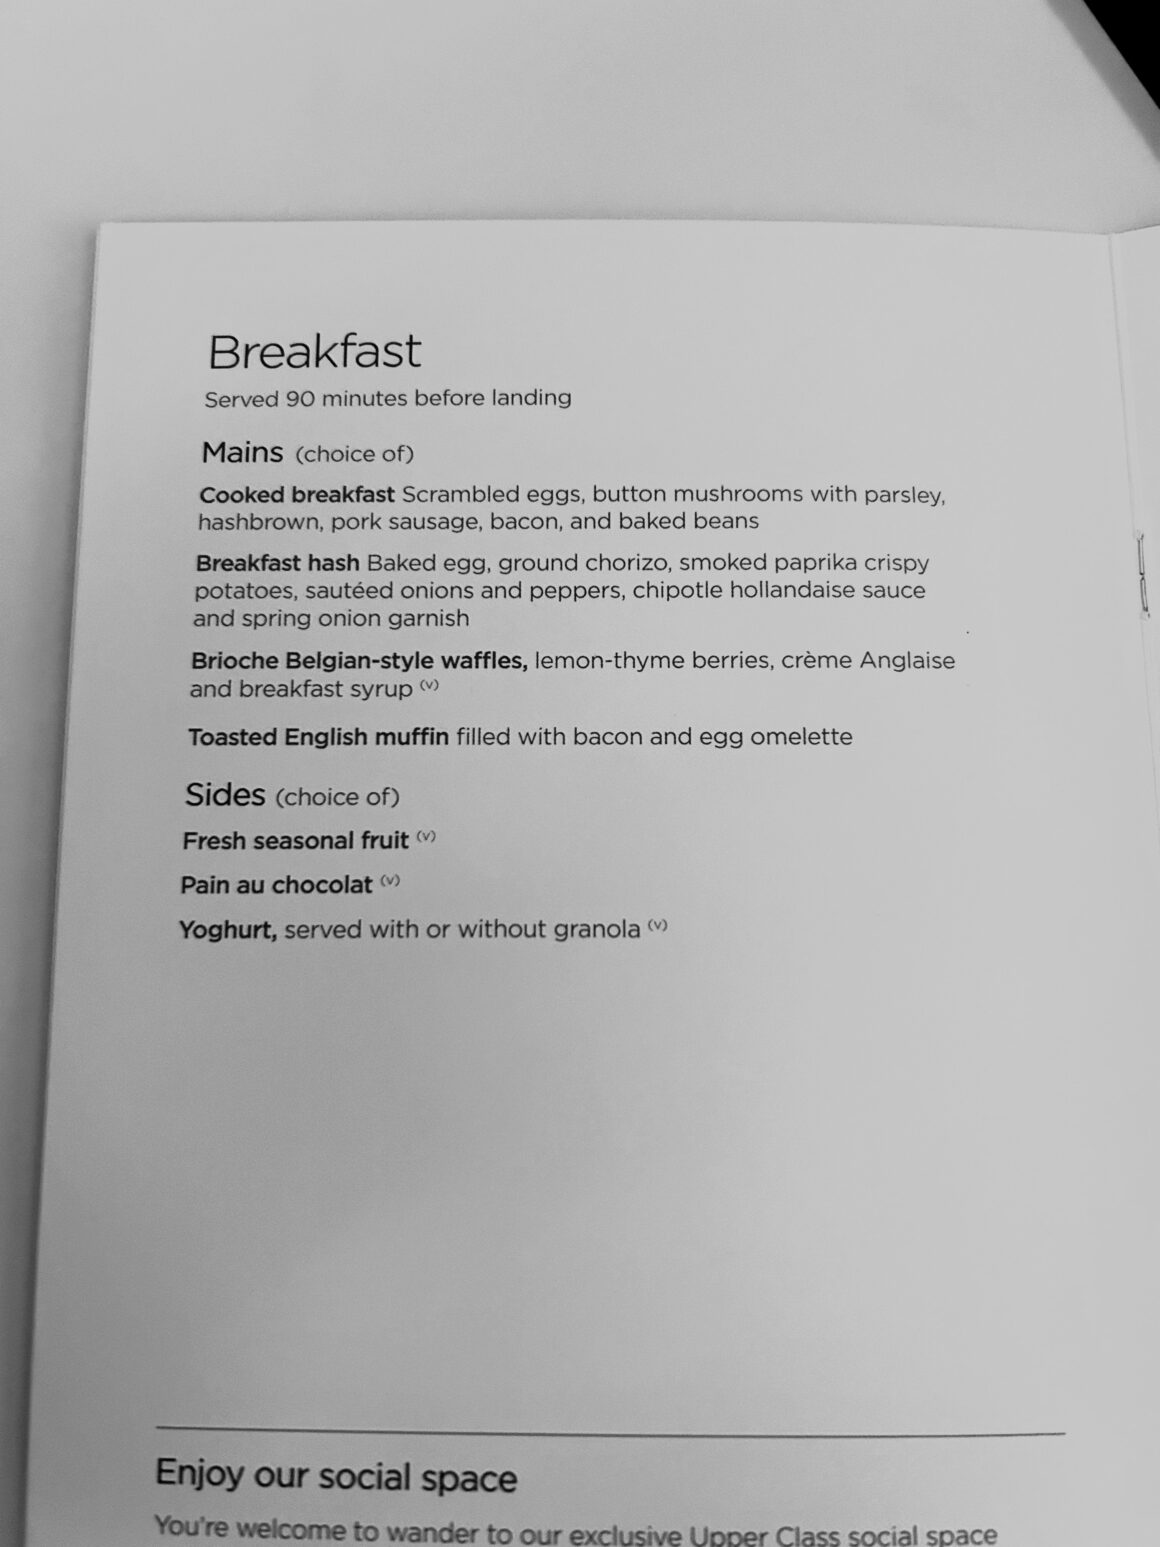 Virgin Atlantic Upper Class A330neo Breakfast Menu 